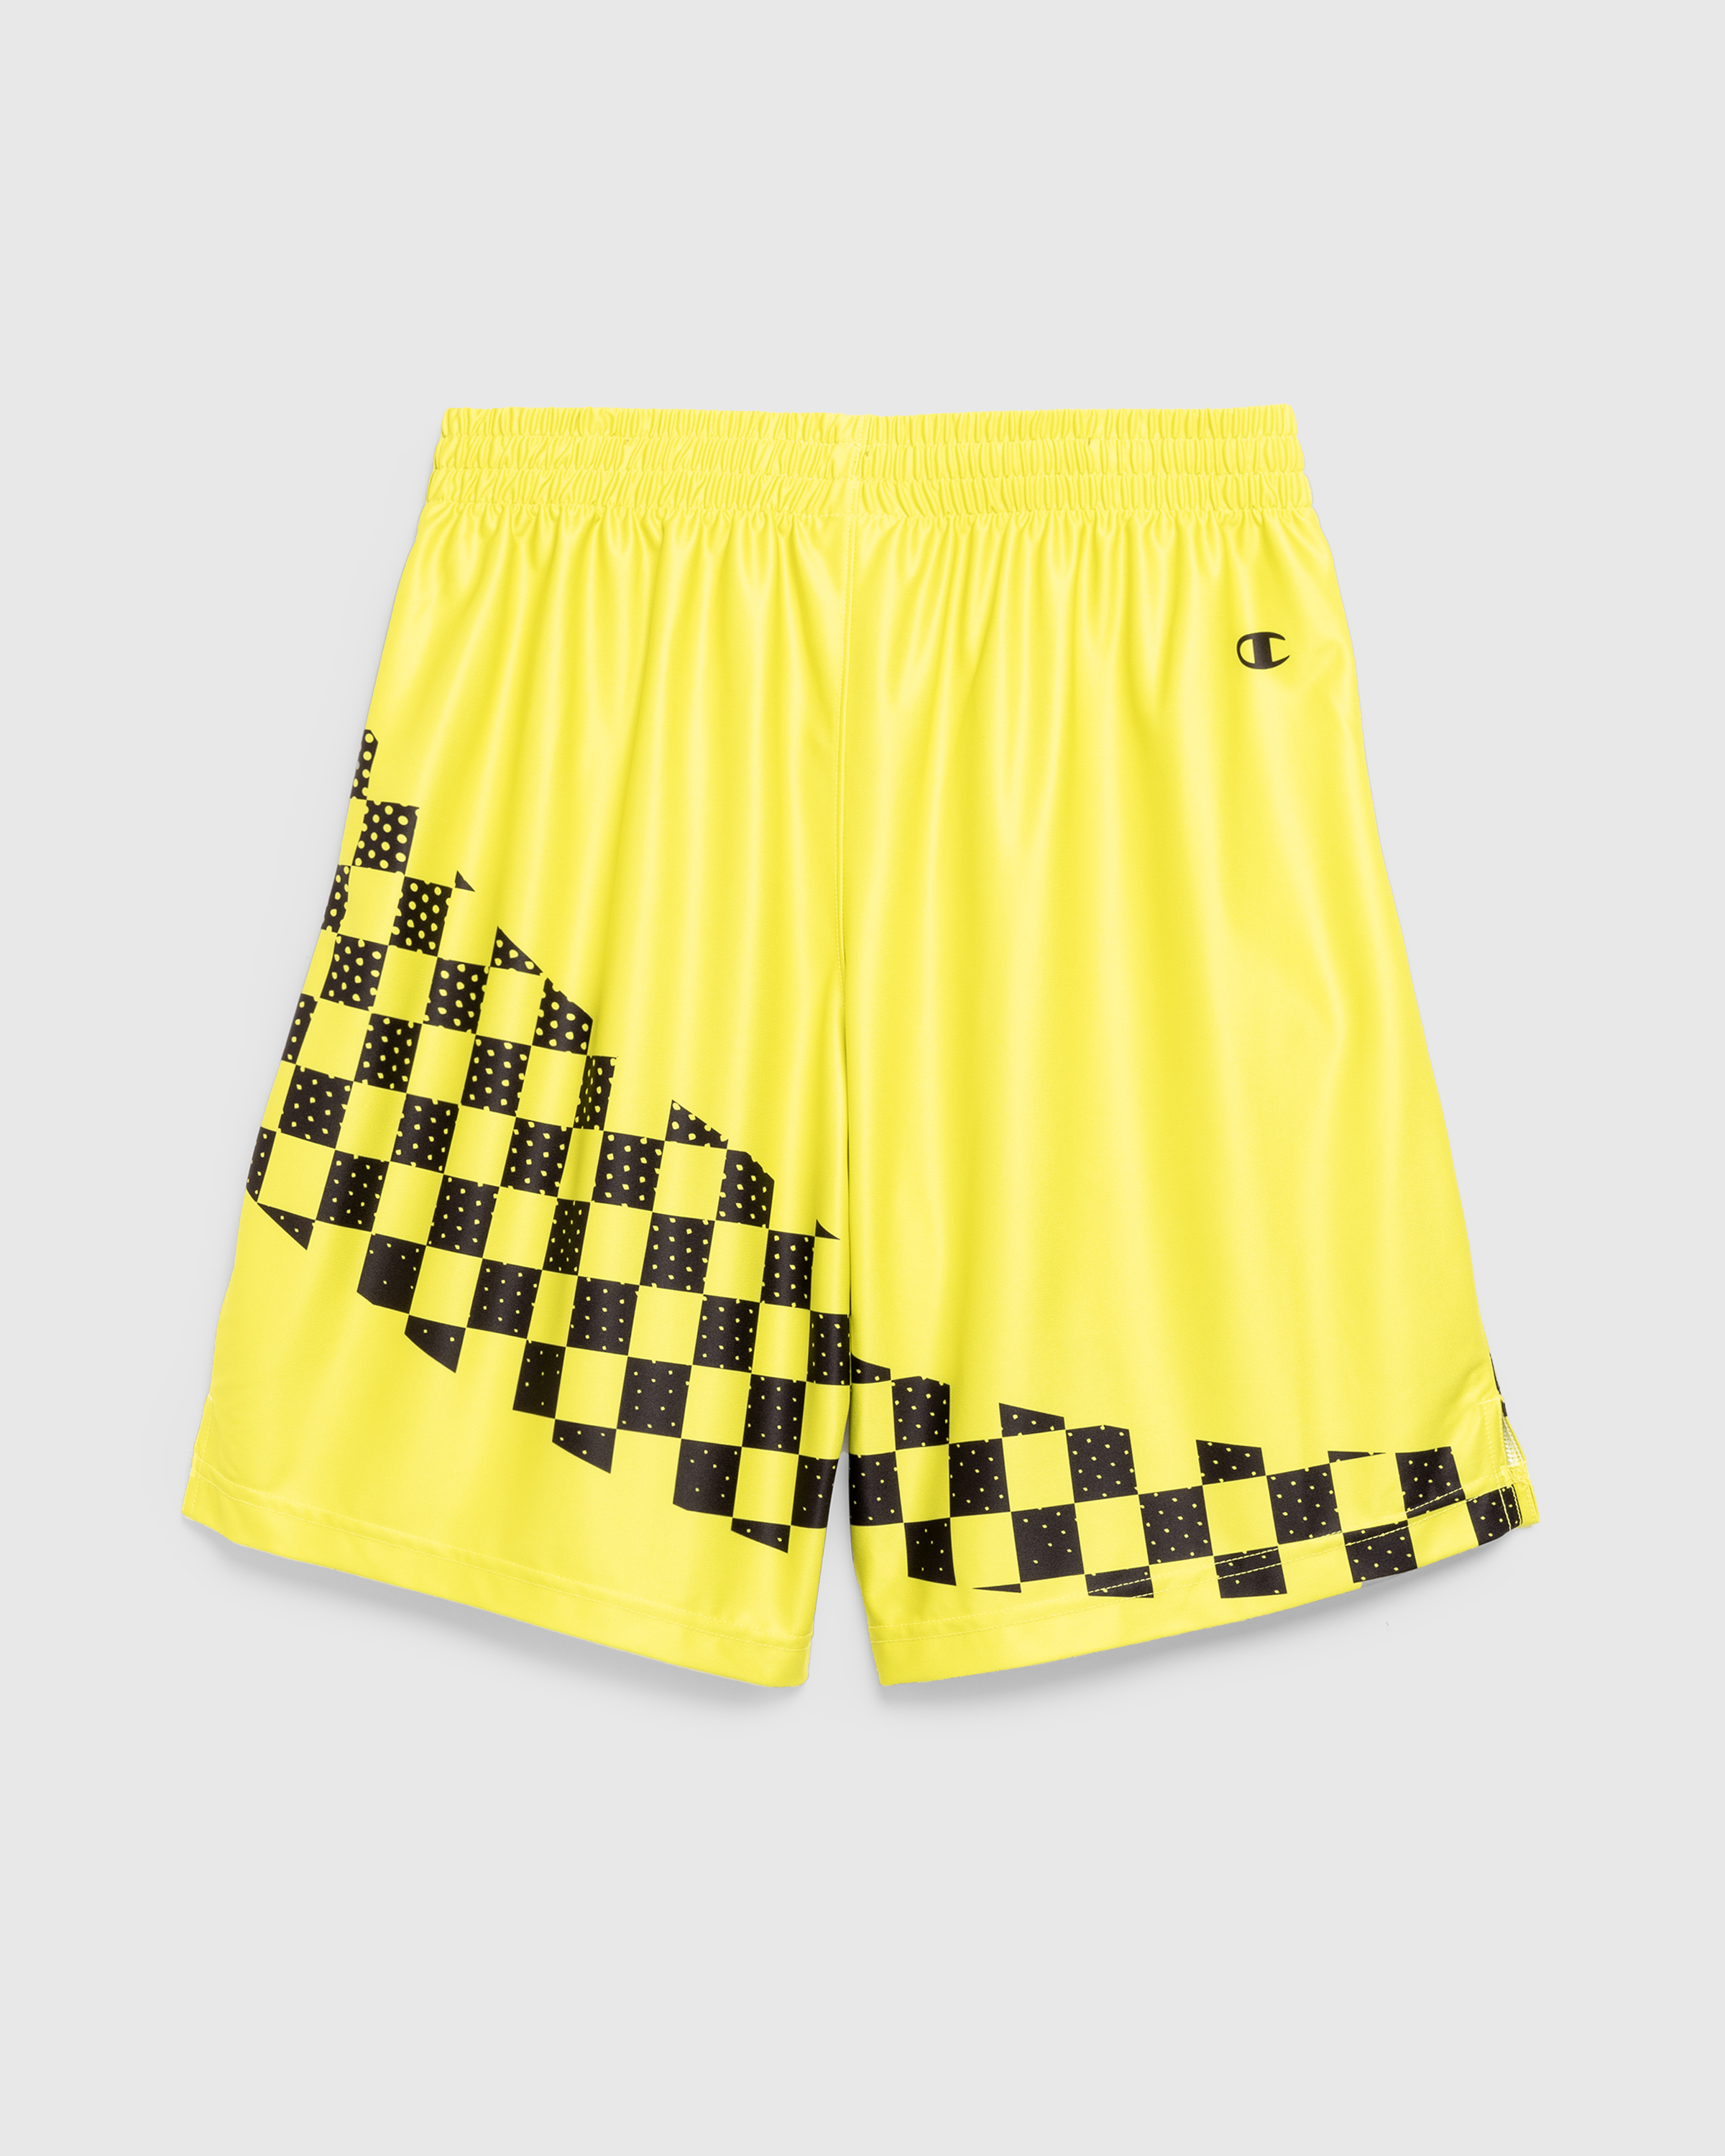 Champion x Highsnobiety x La Sunday – Abidjan Shorts Yellow/Black - Bermuda Cuts - Yellow - Image 3